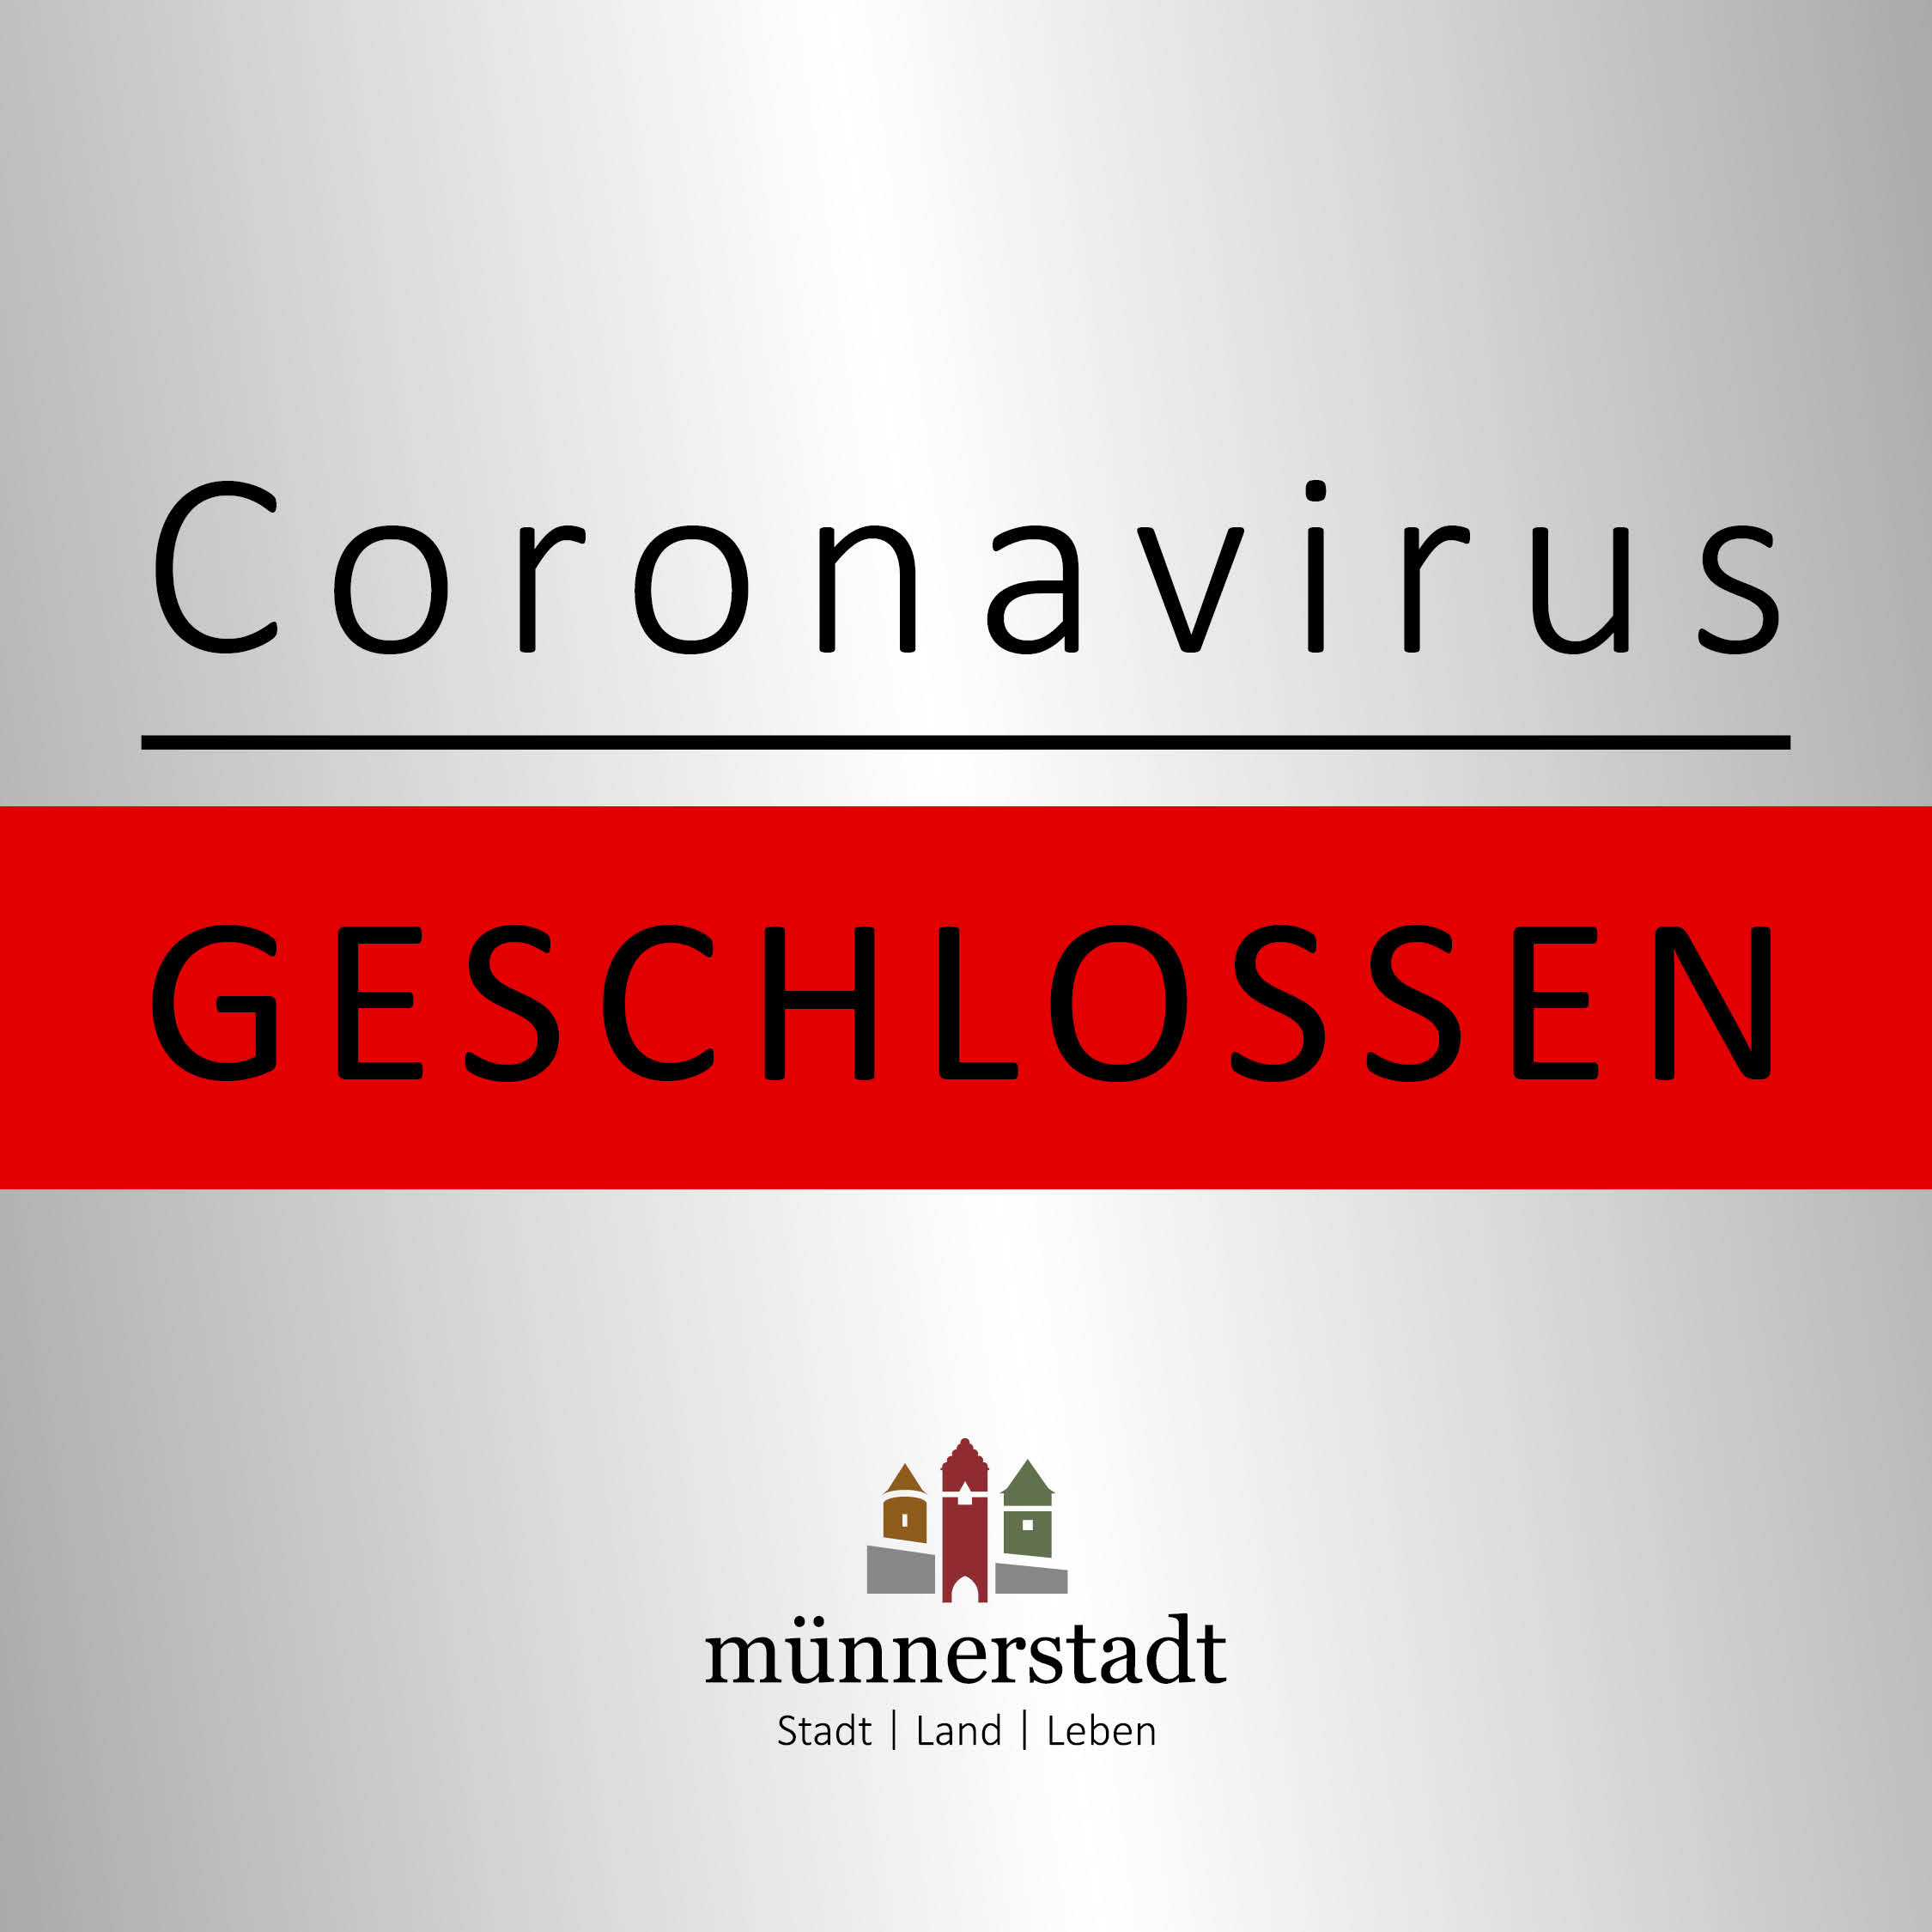 Dienststellen der Stadt Münnerstadt wegen der CORONA-Pandemie geschlossen 